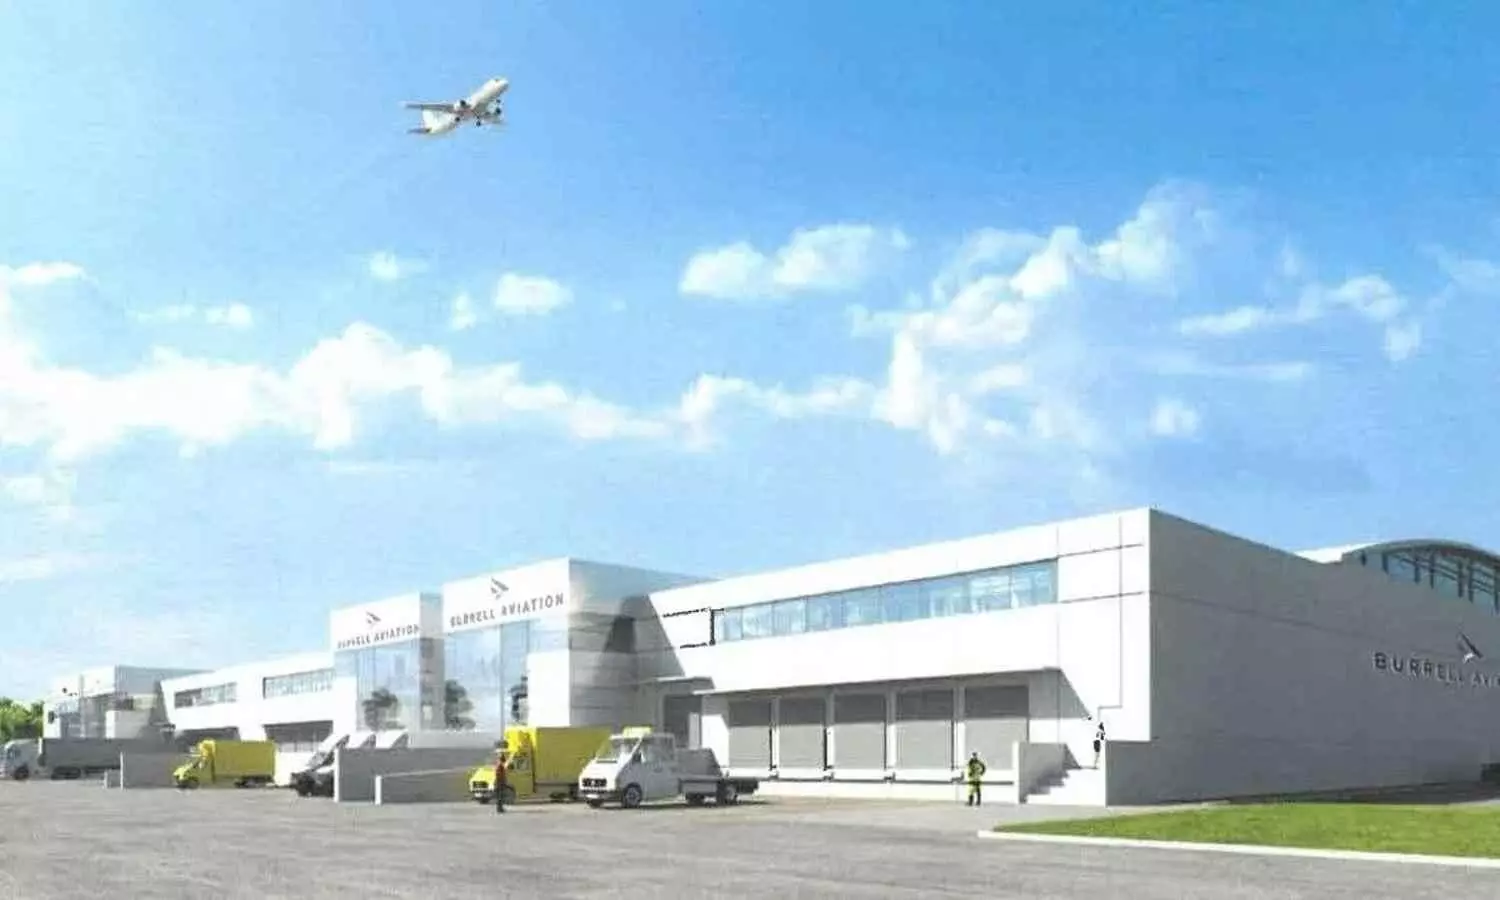 In big cargo push, $65 million development on cards for Lincoln Airport, Nebraska